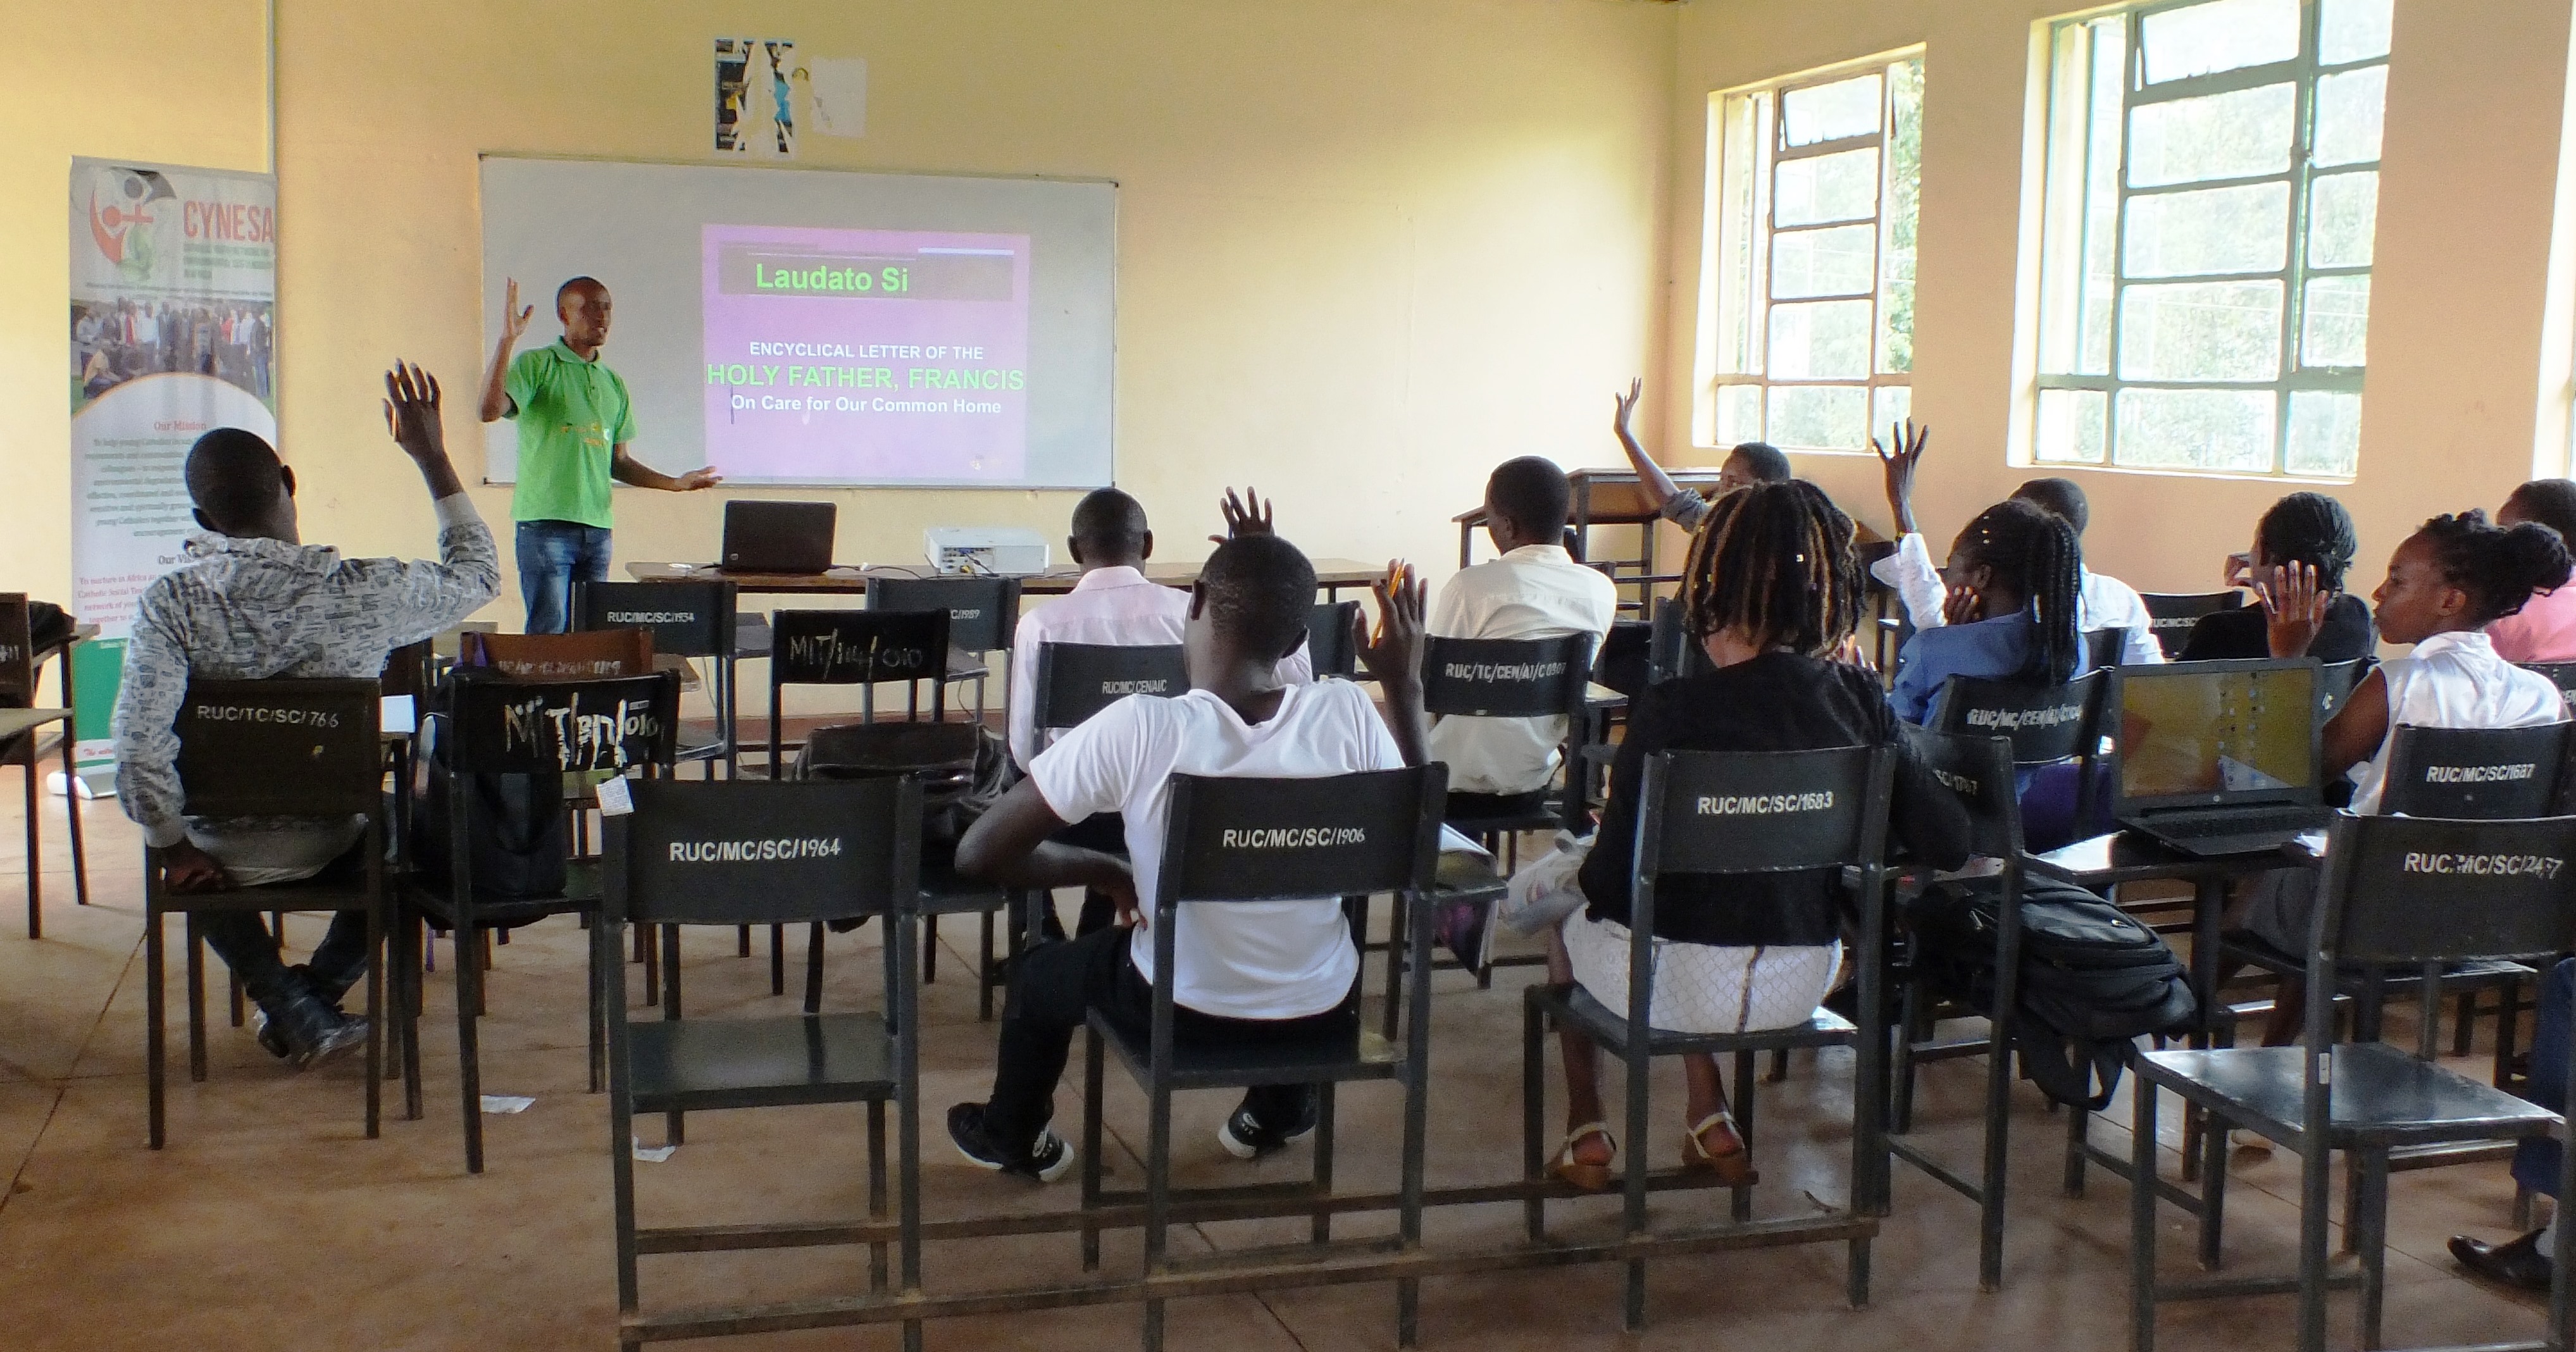 CYNESA-Laudato-Si-Workshop-at-Rongo-University